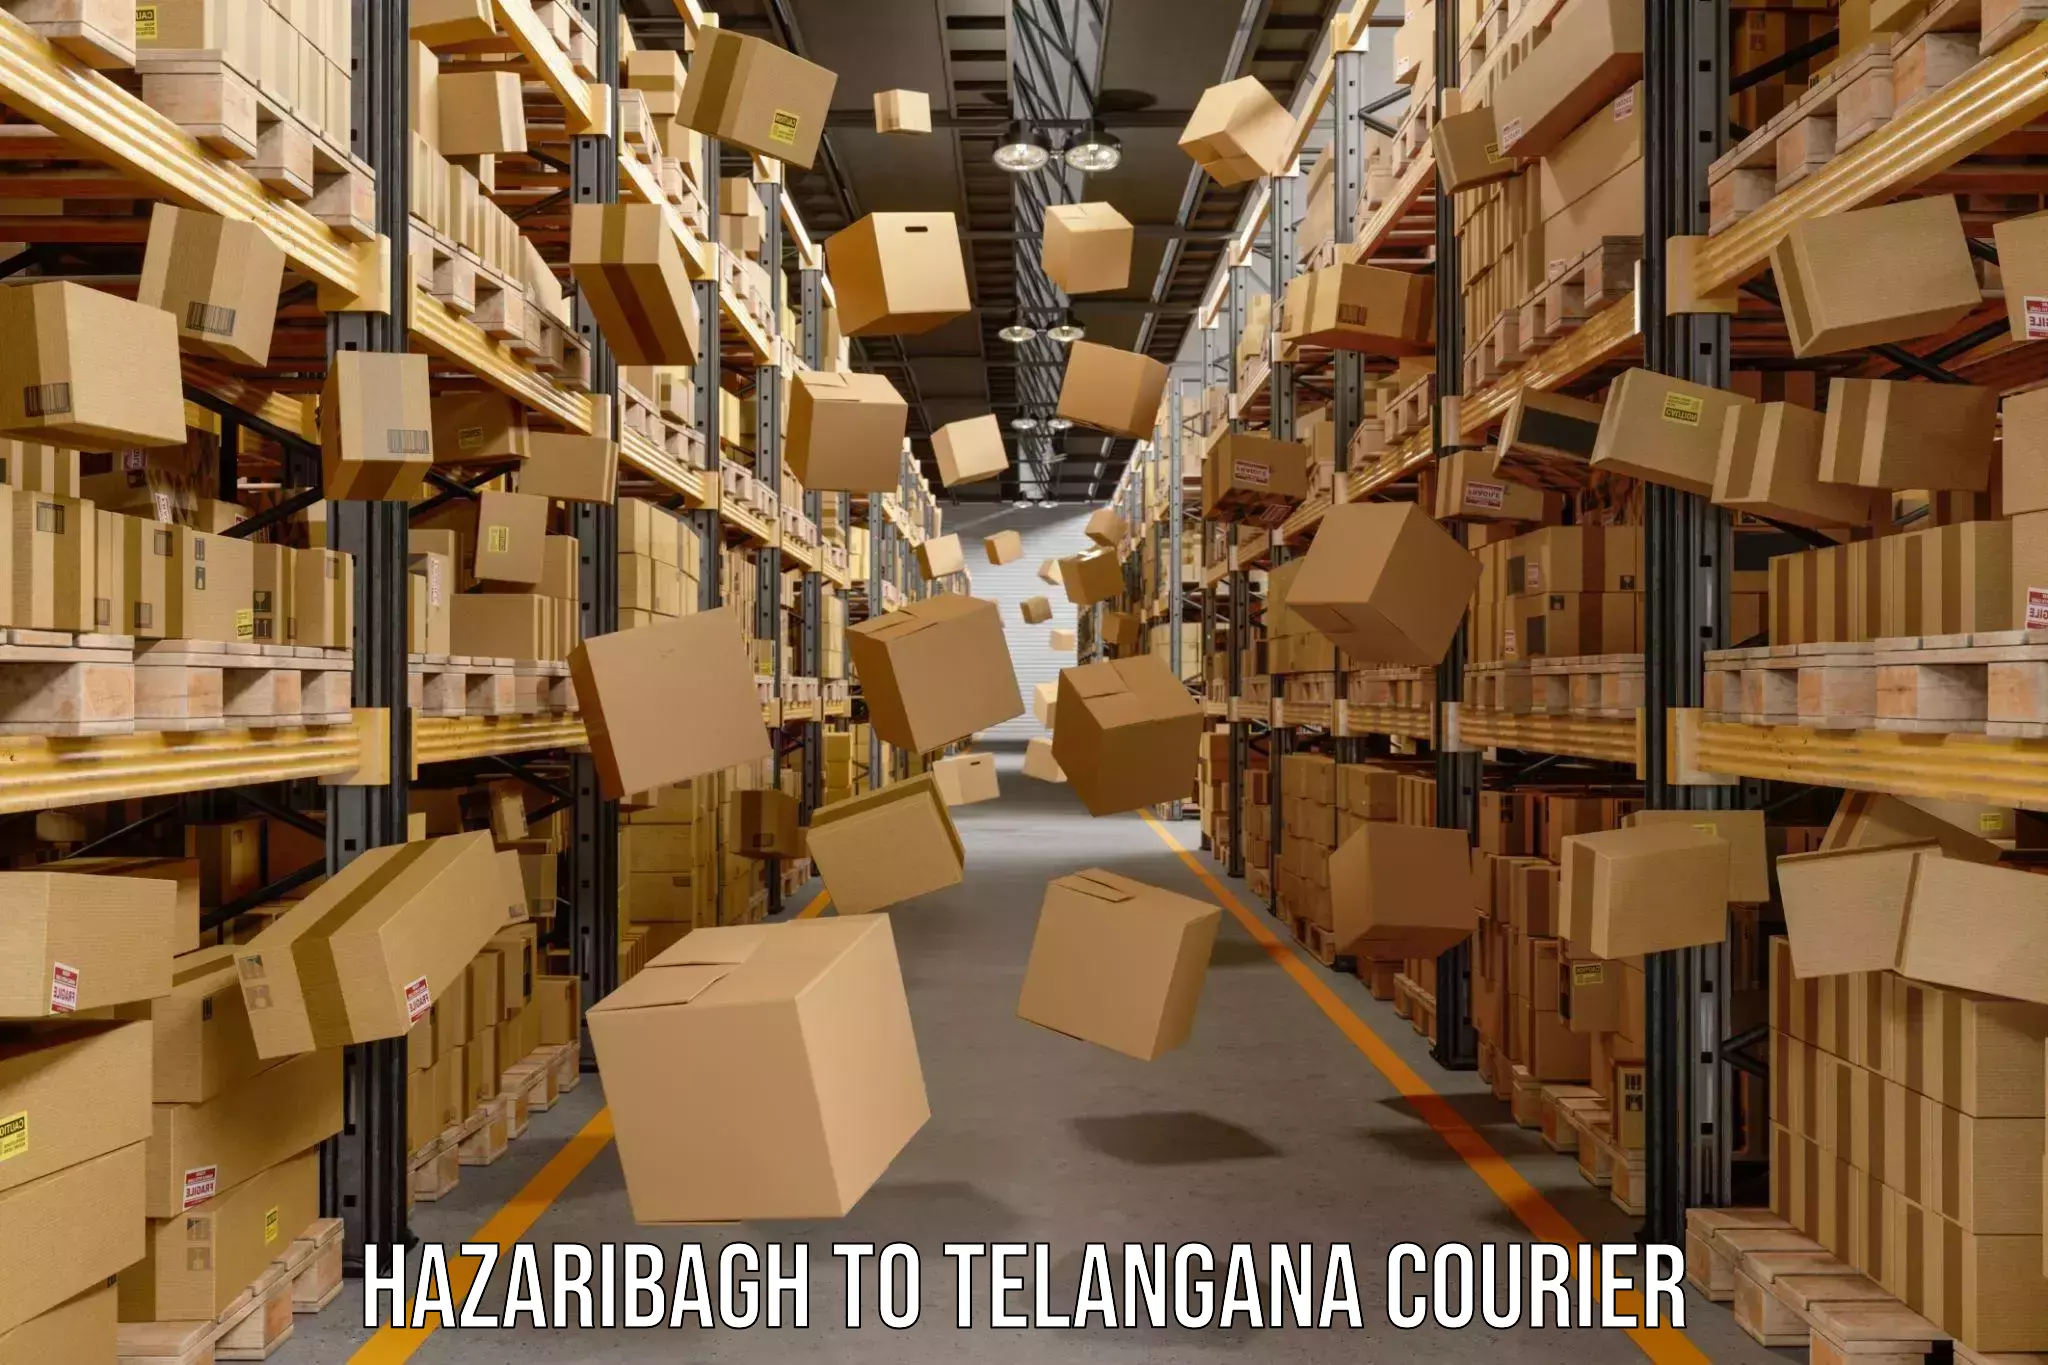 Digital courier platforms Hazaribagh to Trimulgherry